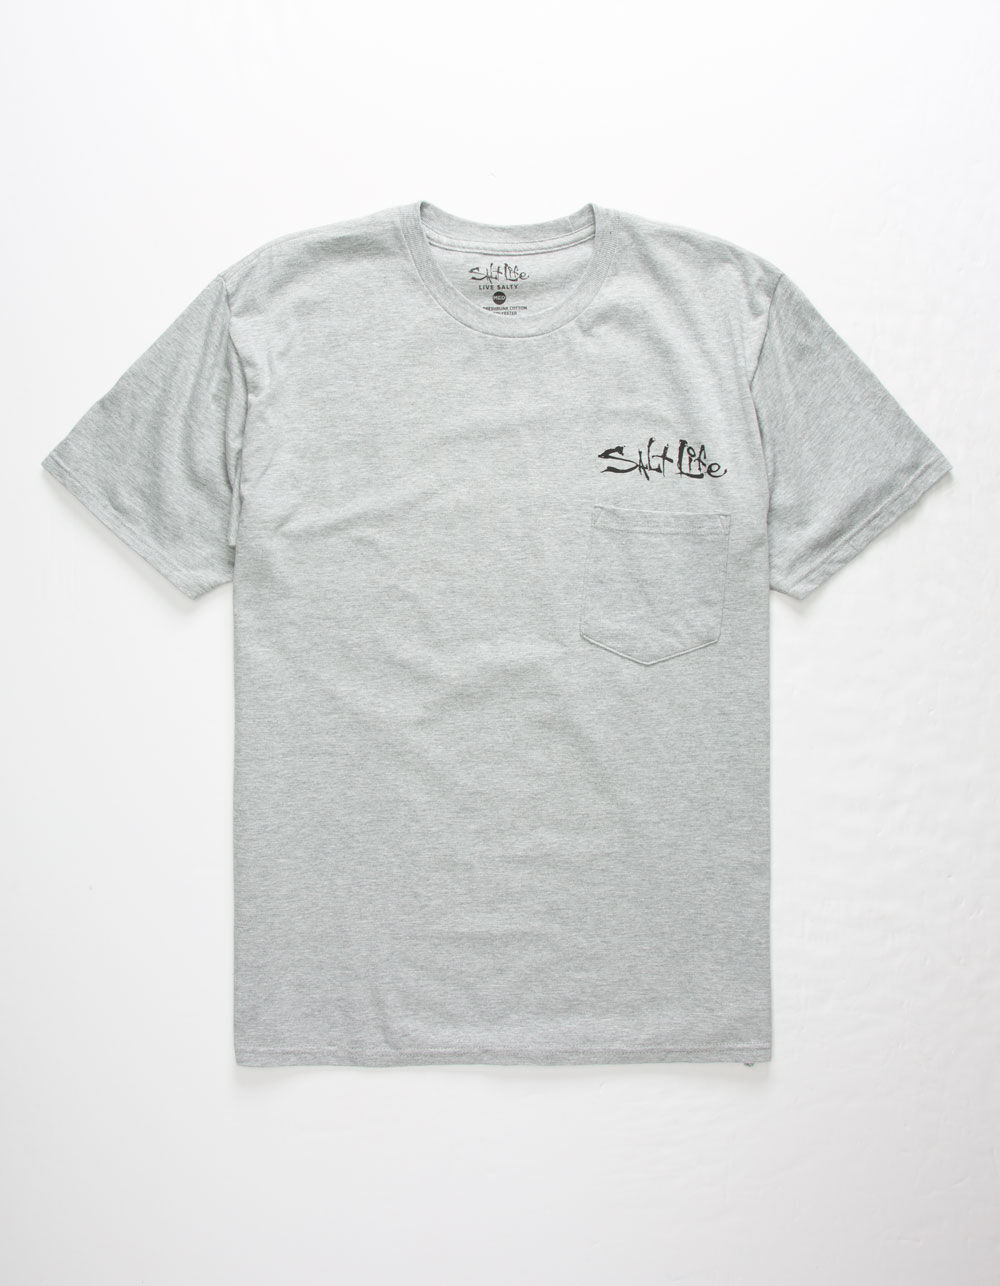 SALT LIFE Marlin Hookup Mens Pocket T-Shirt - HEATHER | Tillys